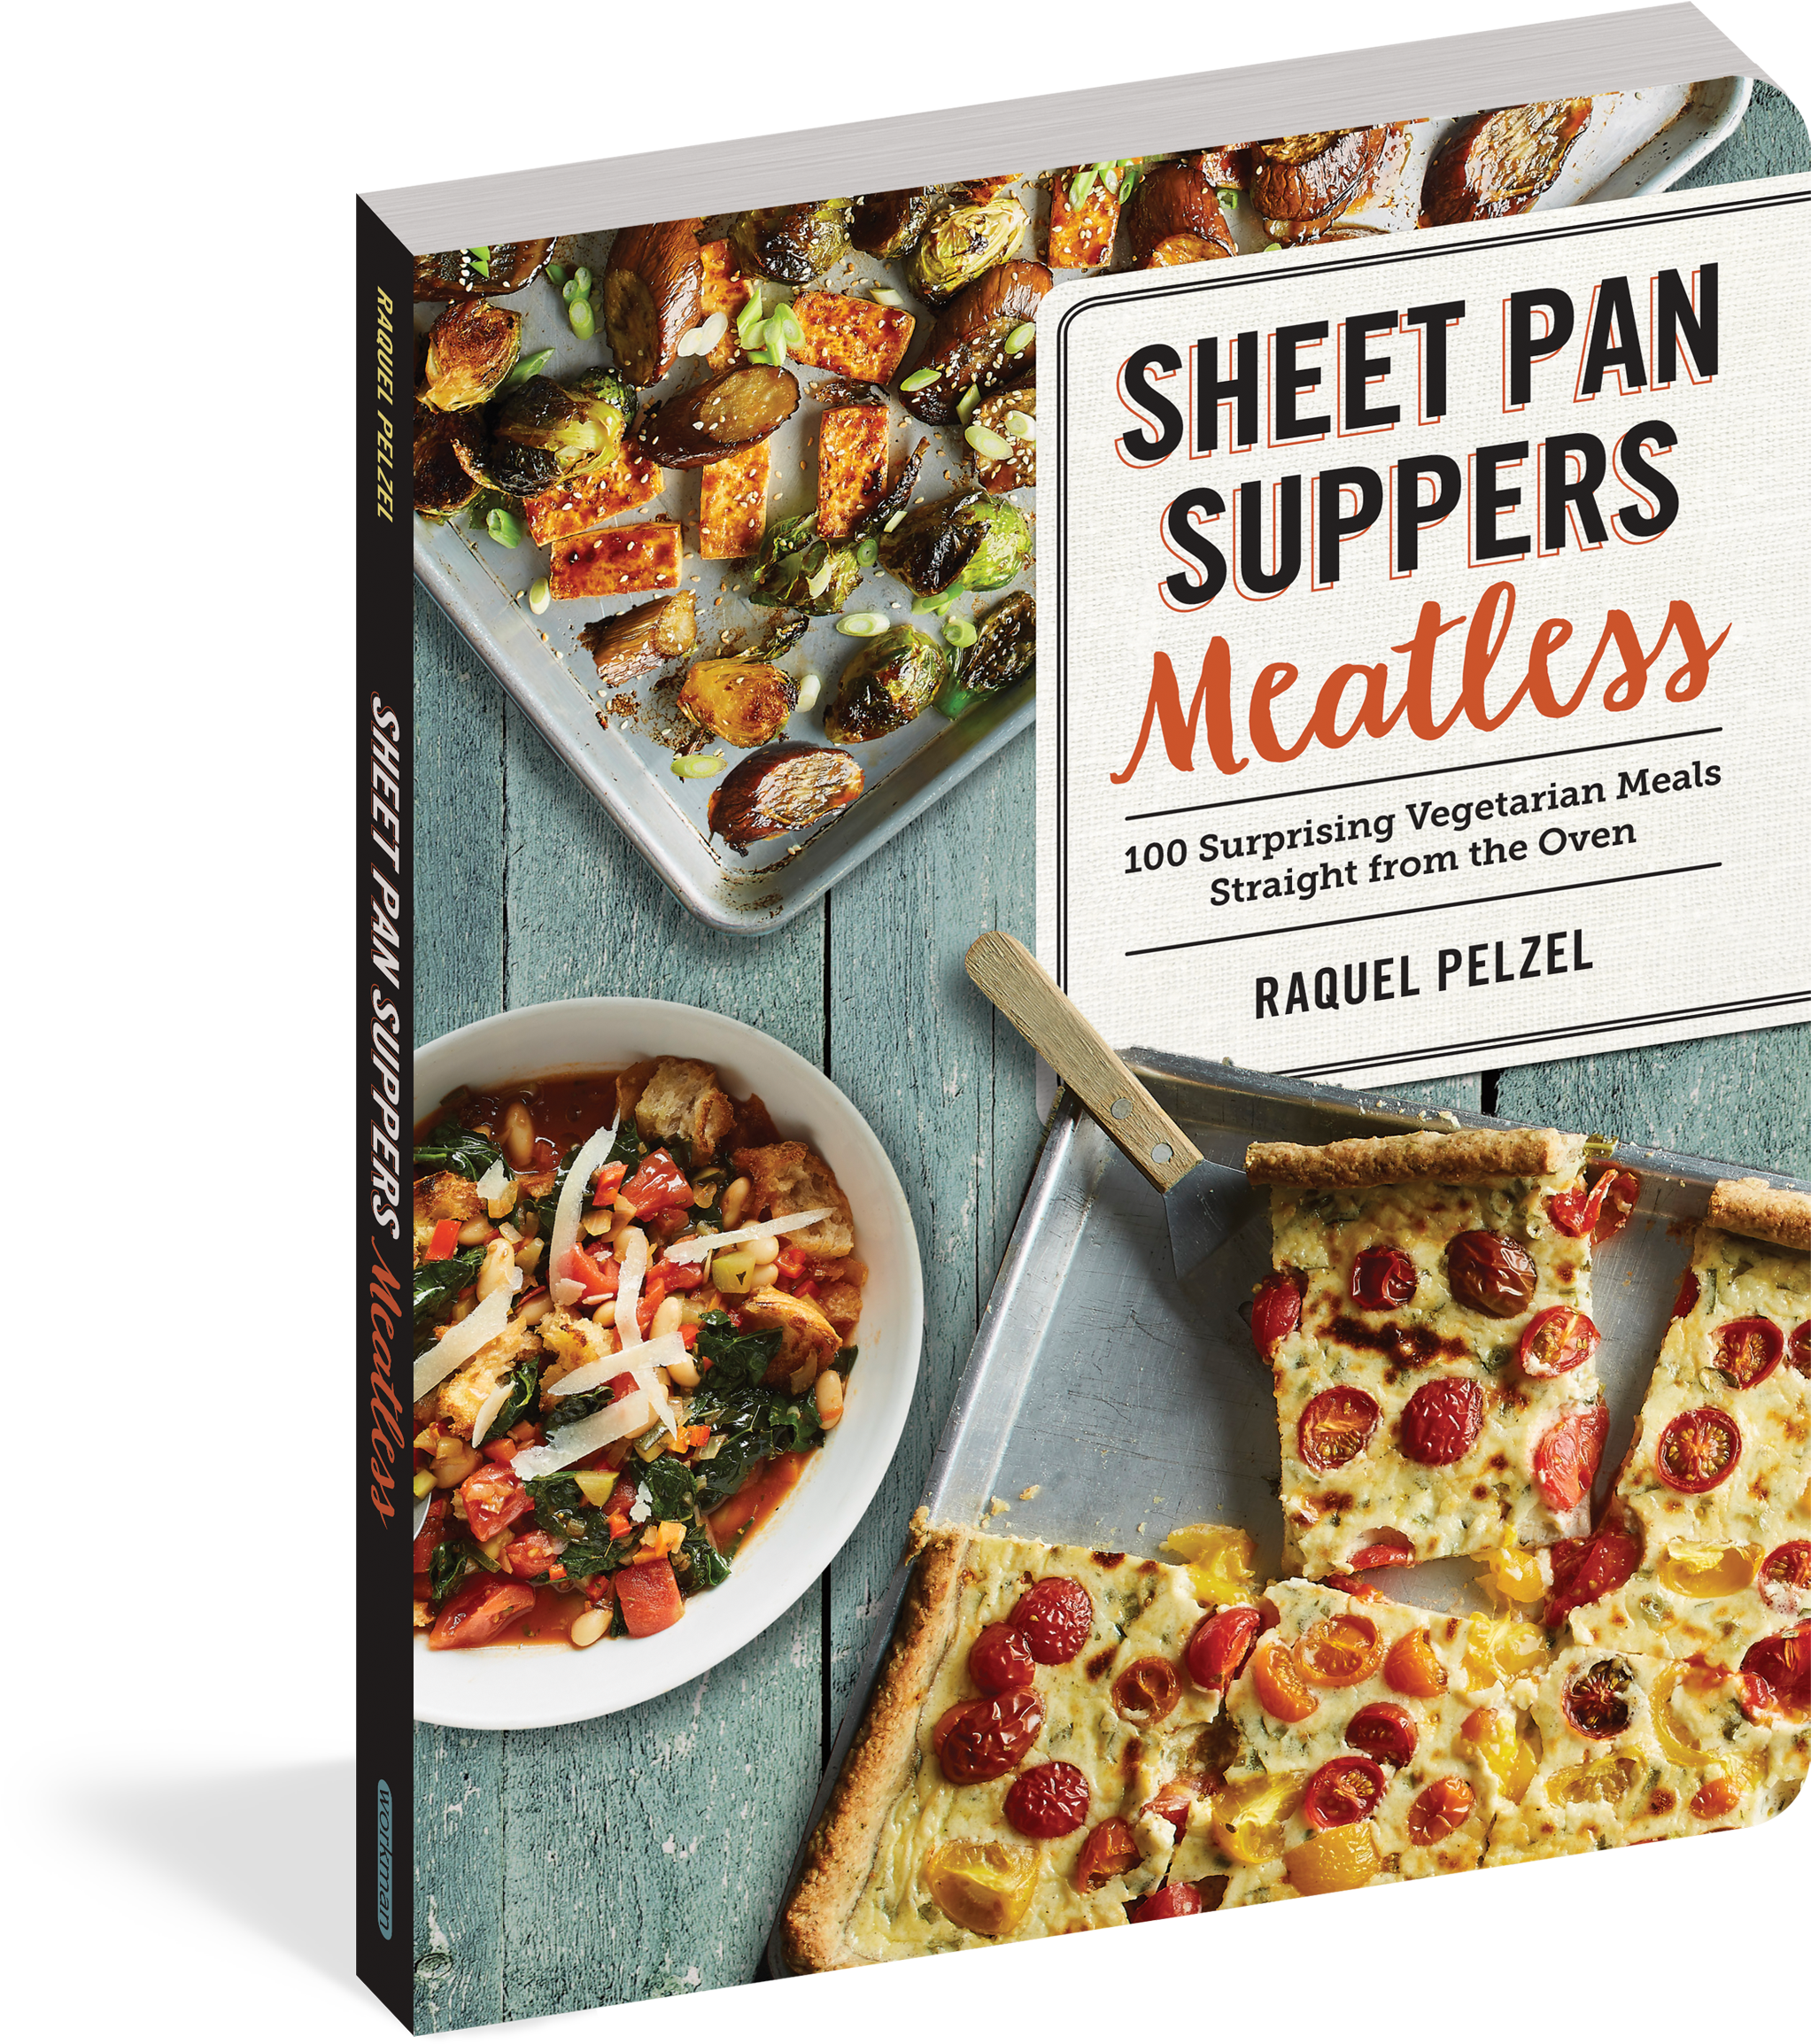 Sheet Pan Suppers Meatless - Sheet Pan Suppers Meatless - 100 Surprising Vegetarian (2175x2400), Png Download